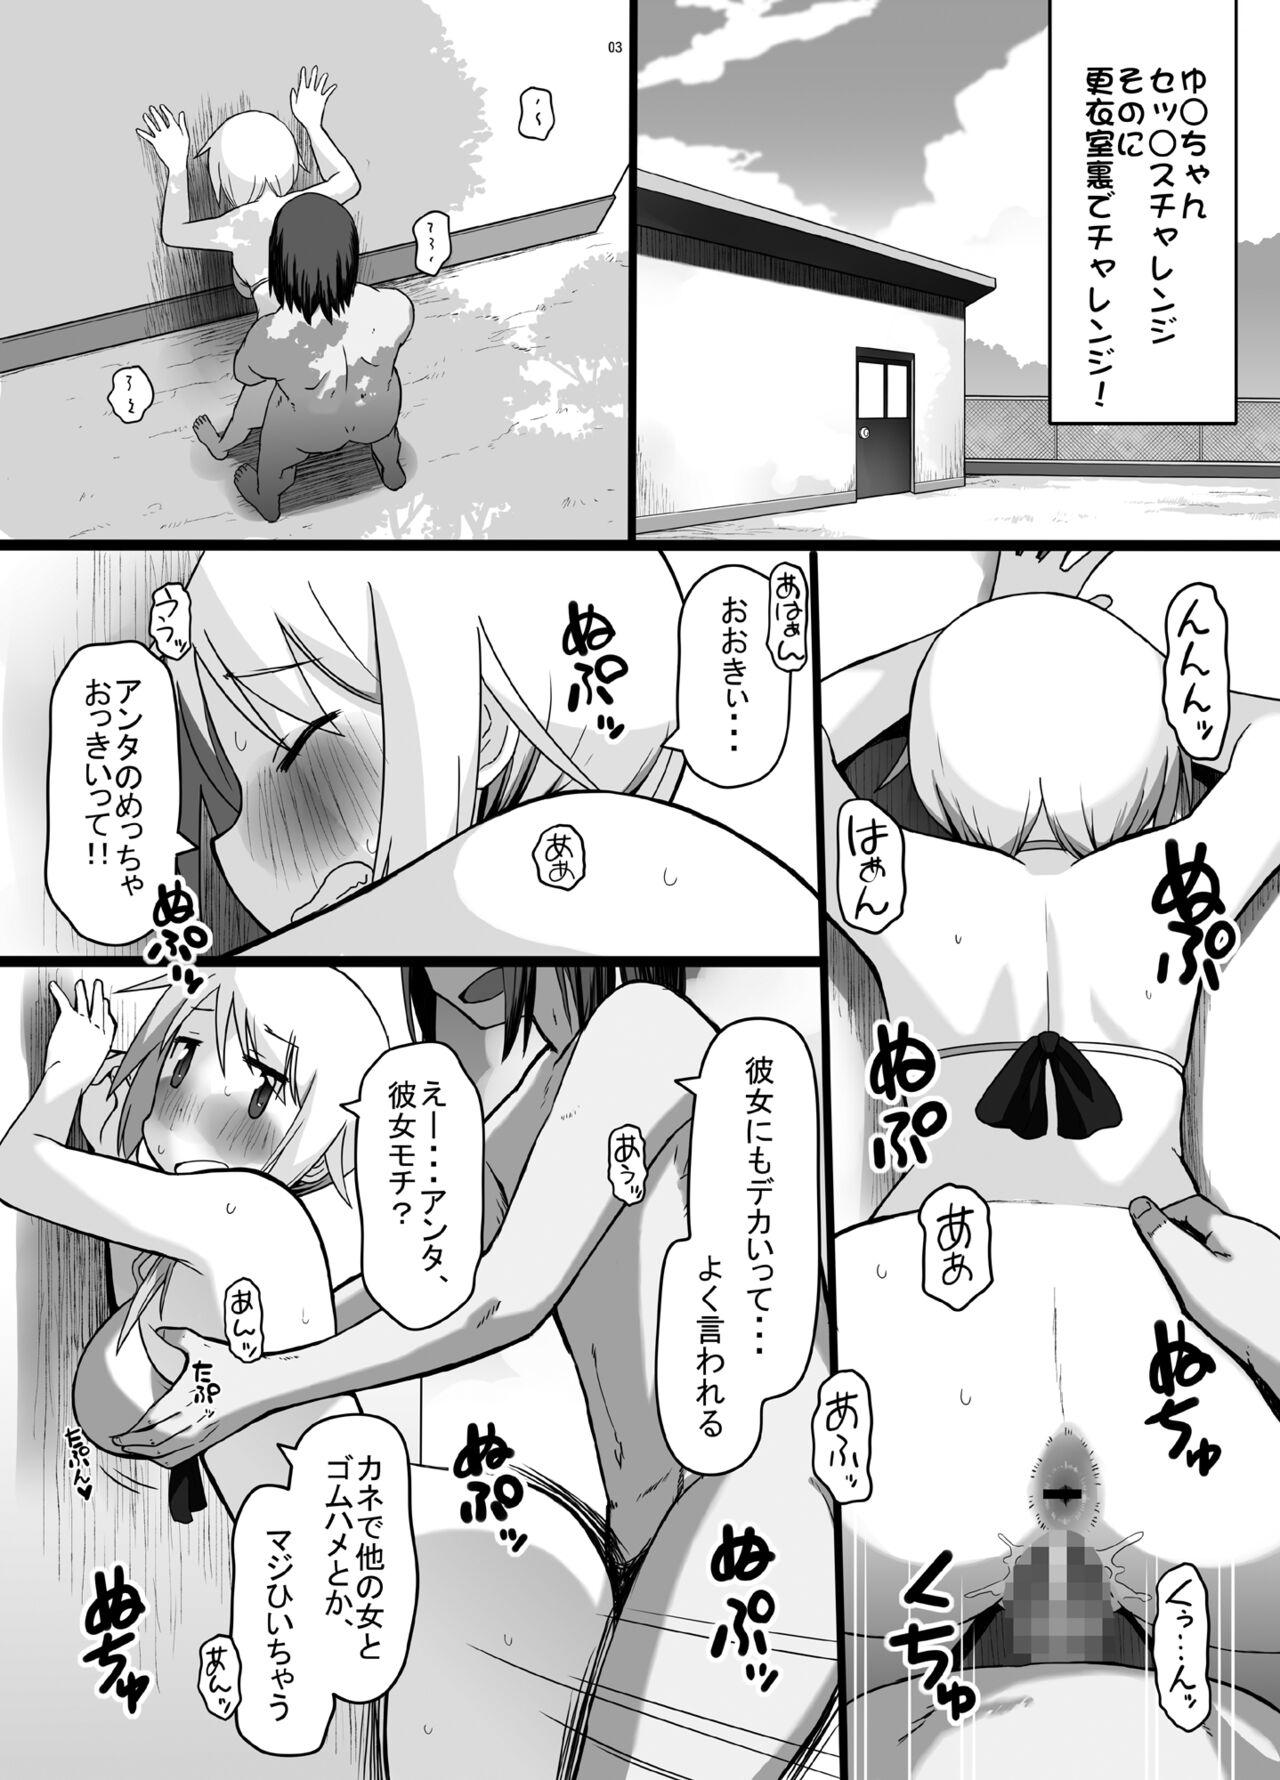 Nut Yui-chan SEX Challenge!! - Yuyushiki Blondes - Page 4